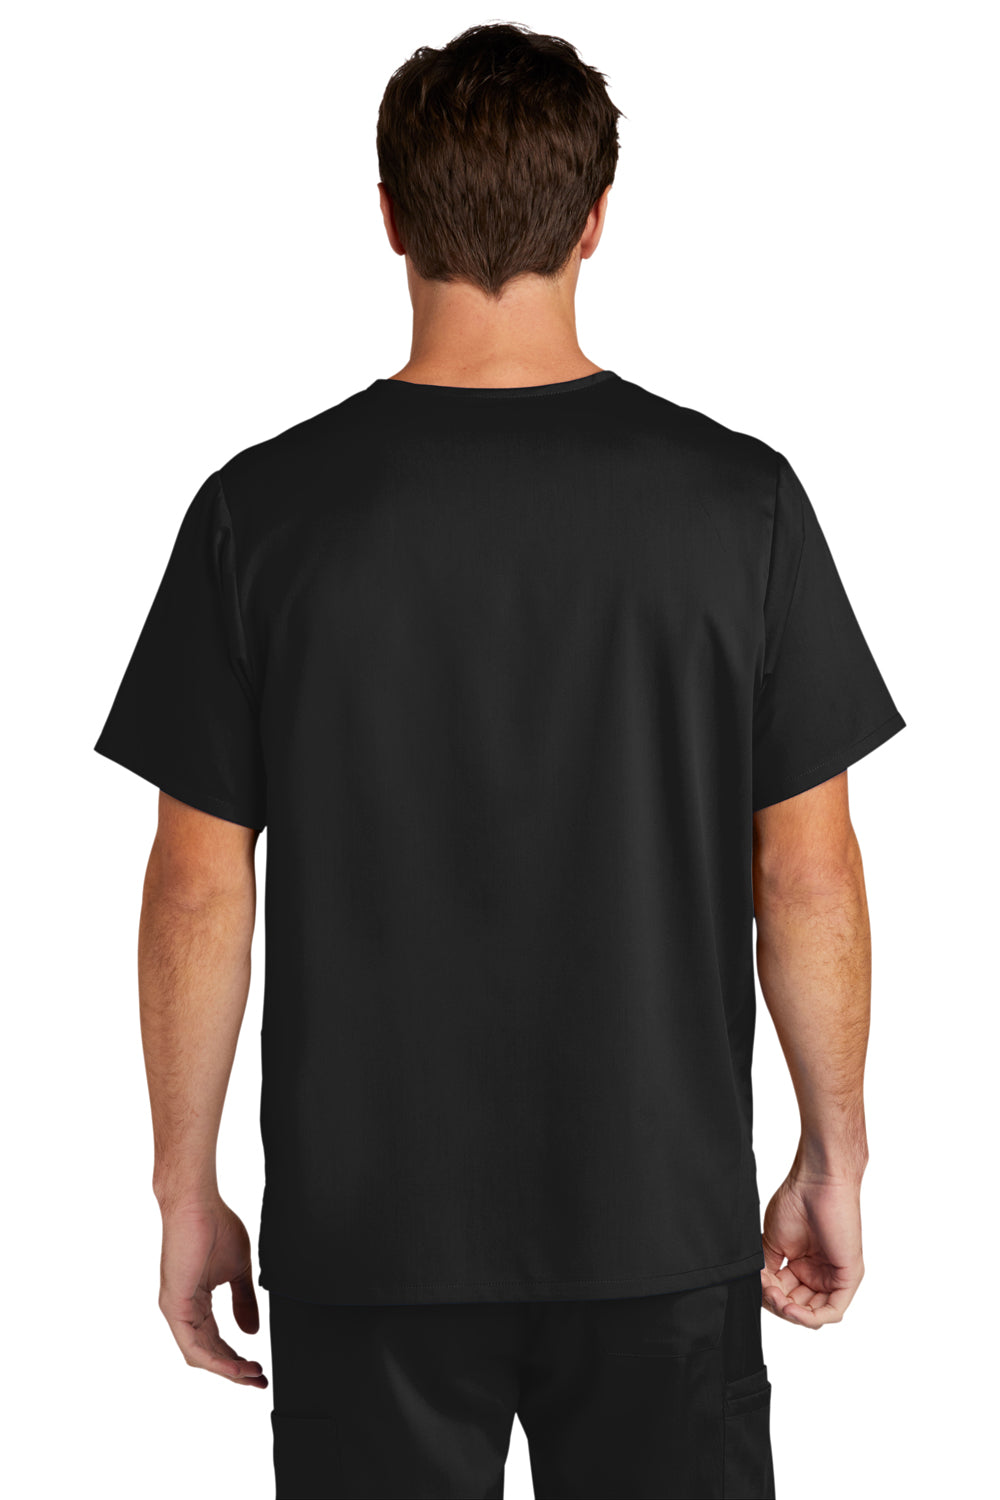 Wonderwink WW5068 Premiere Flex Short Sleeve V-Neck Shirt Black Back